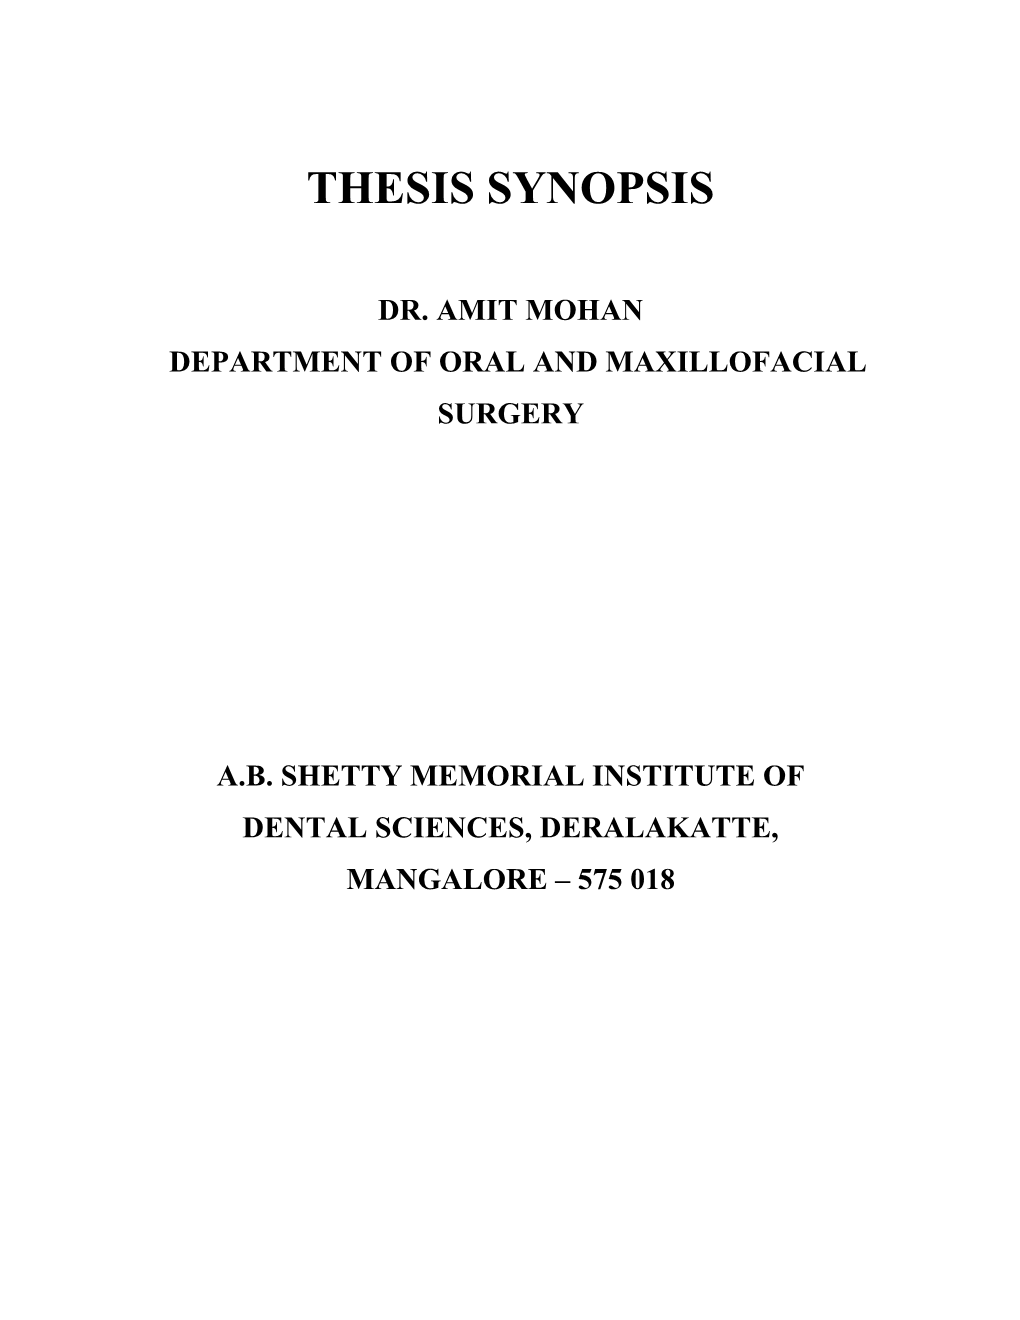 A.B. Shetty Memorial Institute of Dental Sciences, Deralakatte, Mangalore 575018